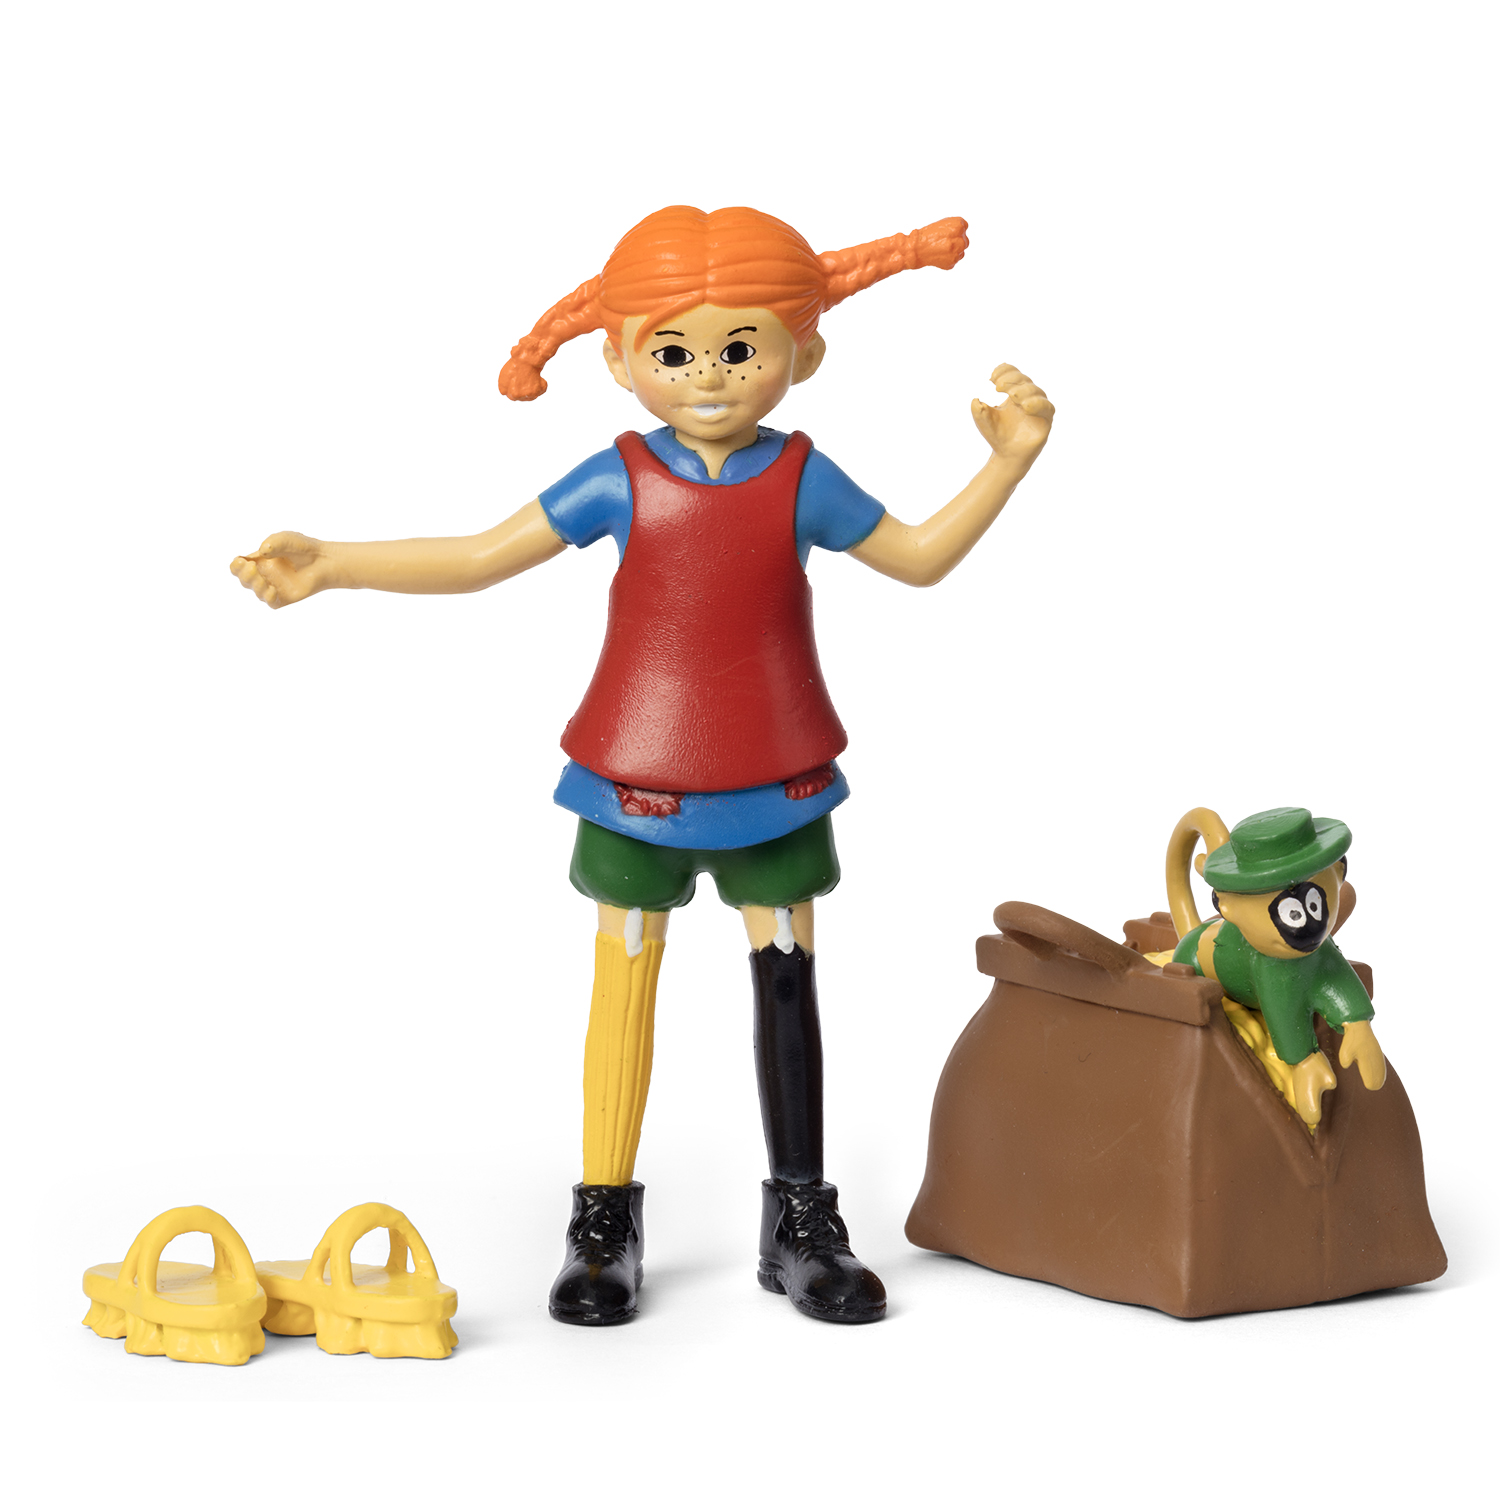 Pippi pippi figurine set pippi & accessories